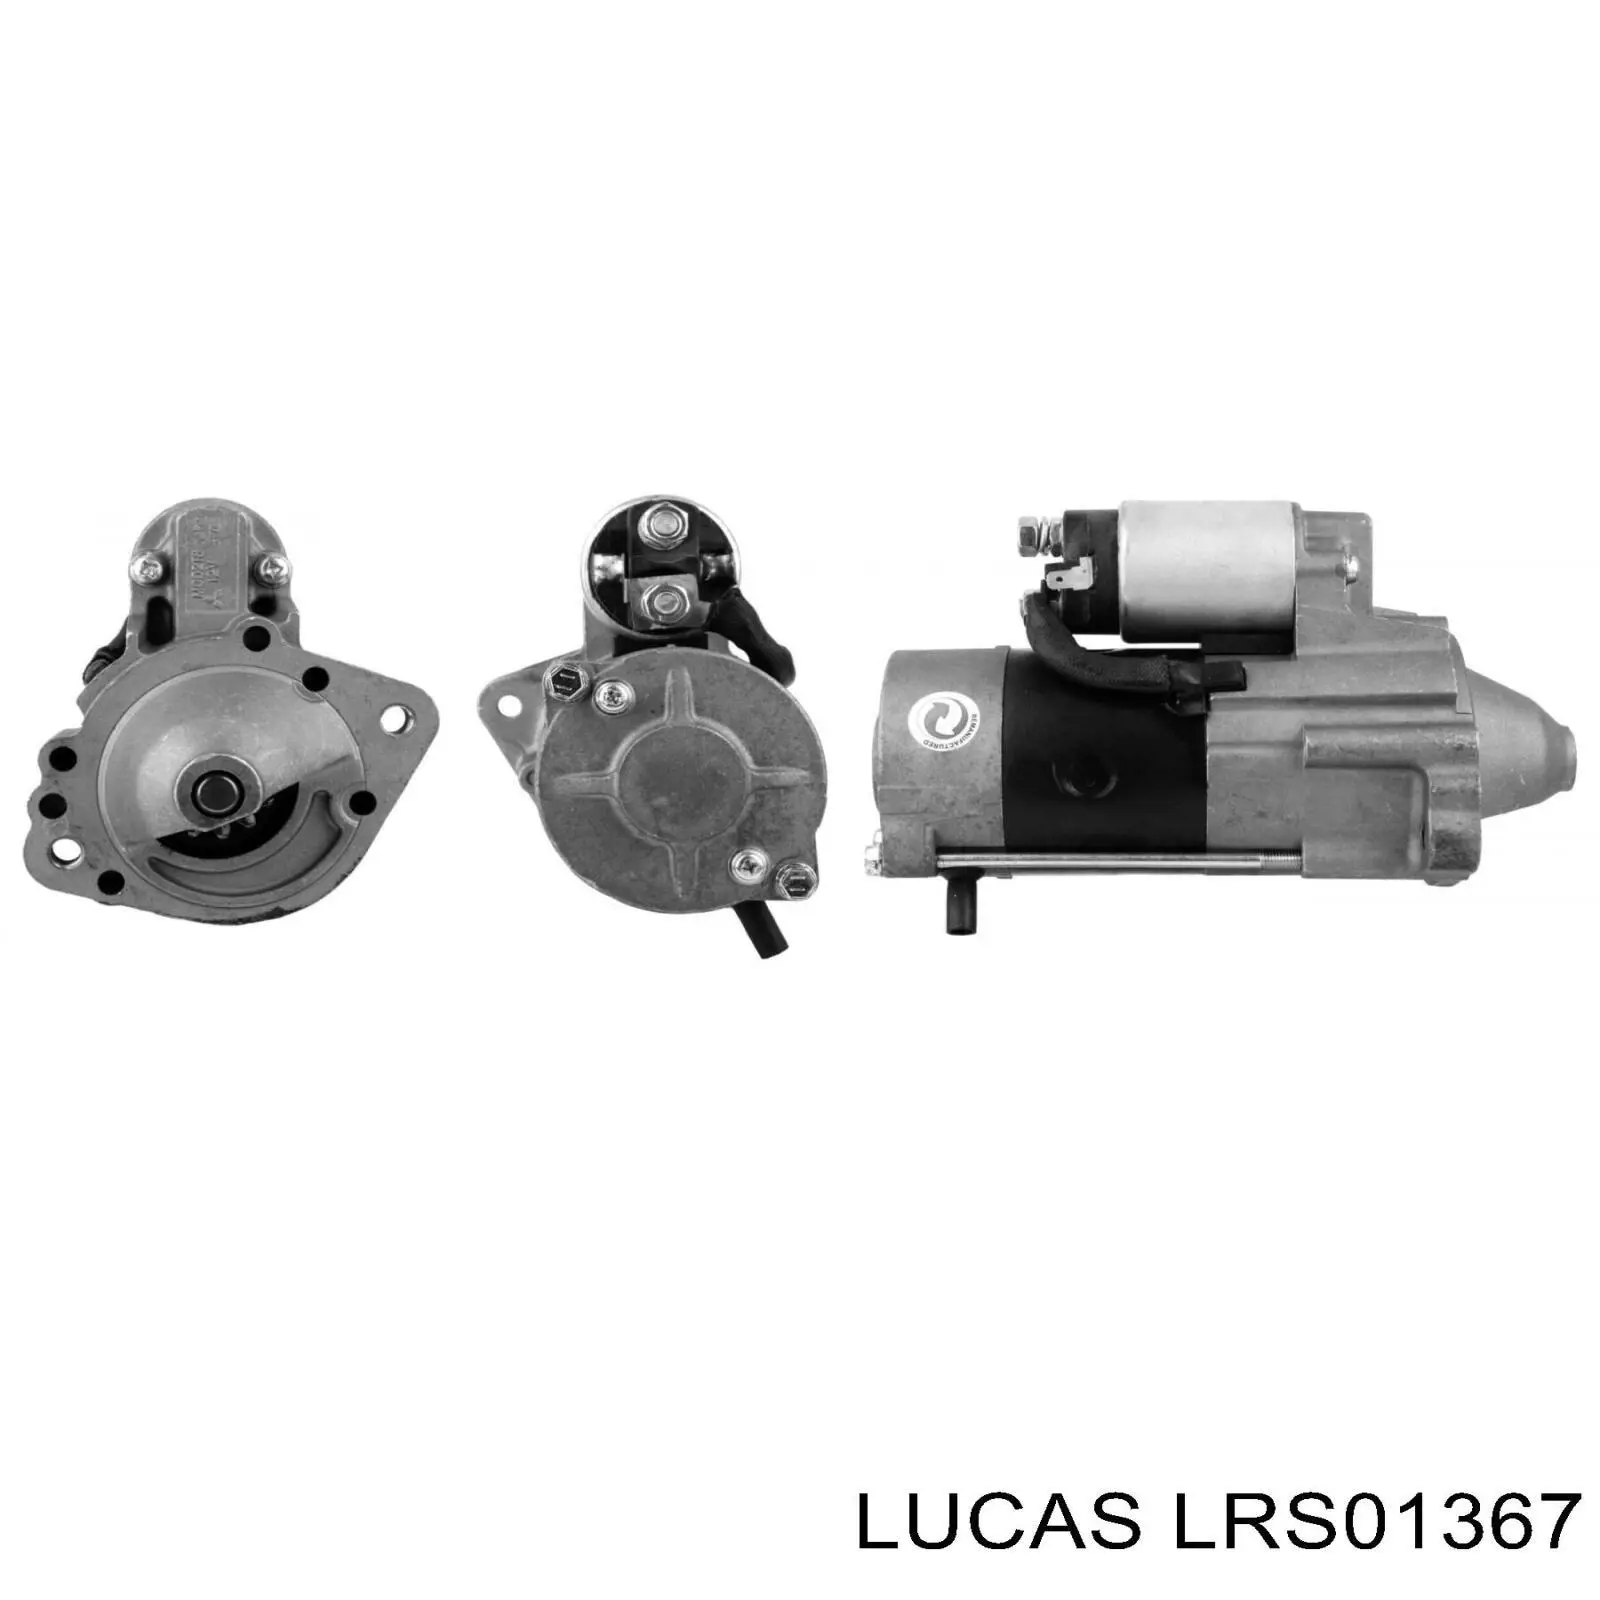 Motor de arranque LRS01367 Lucas